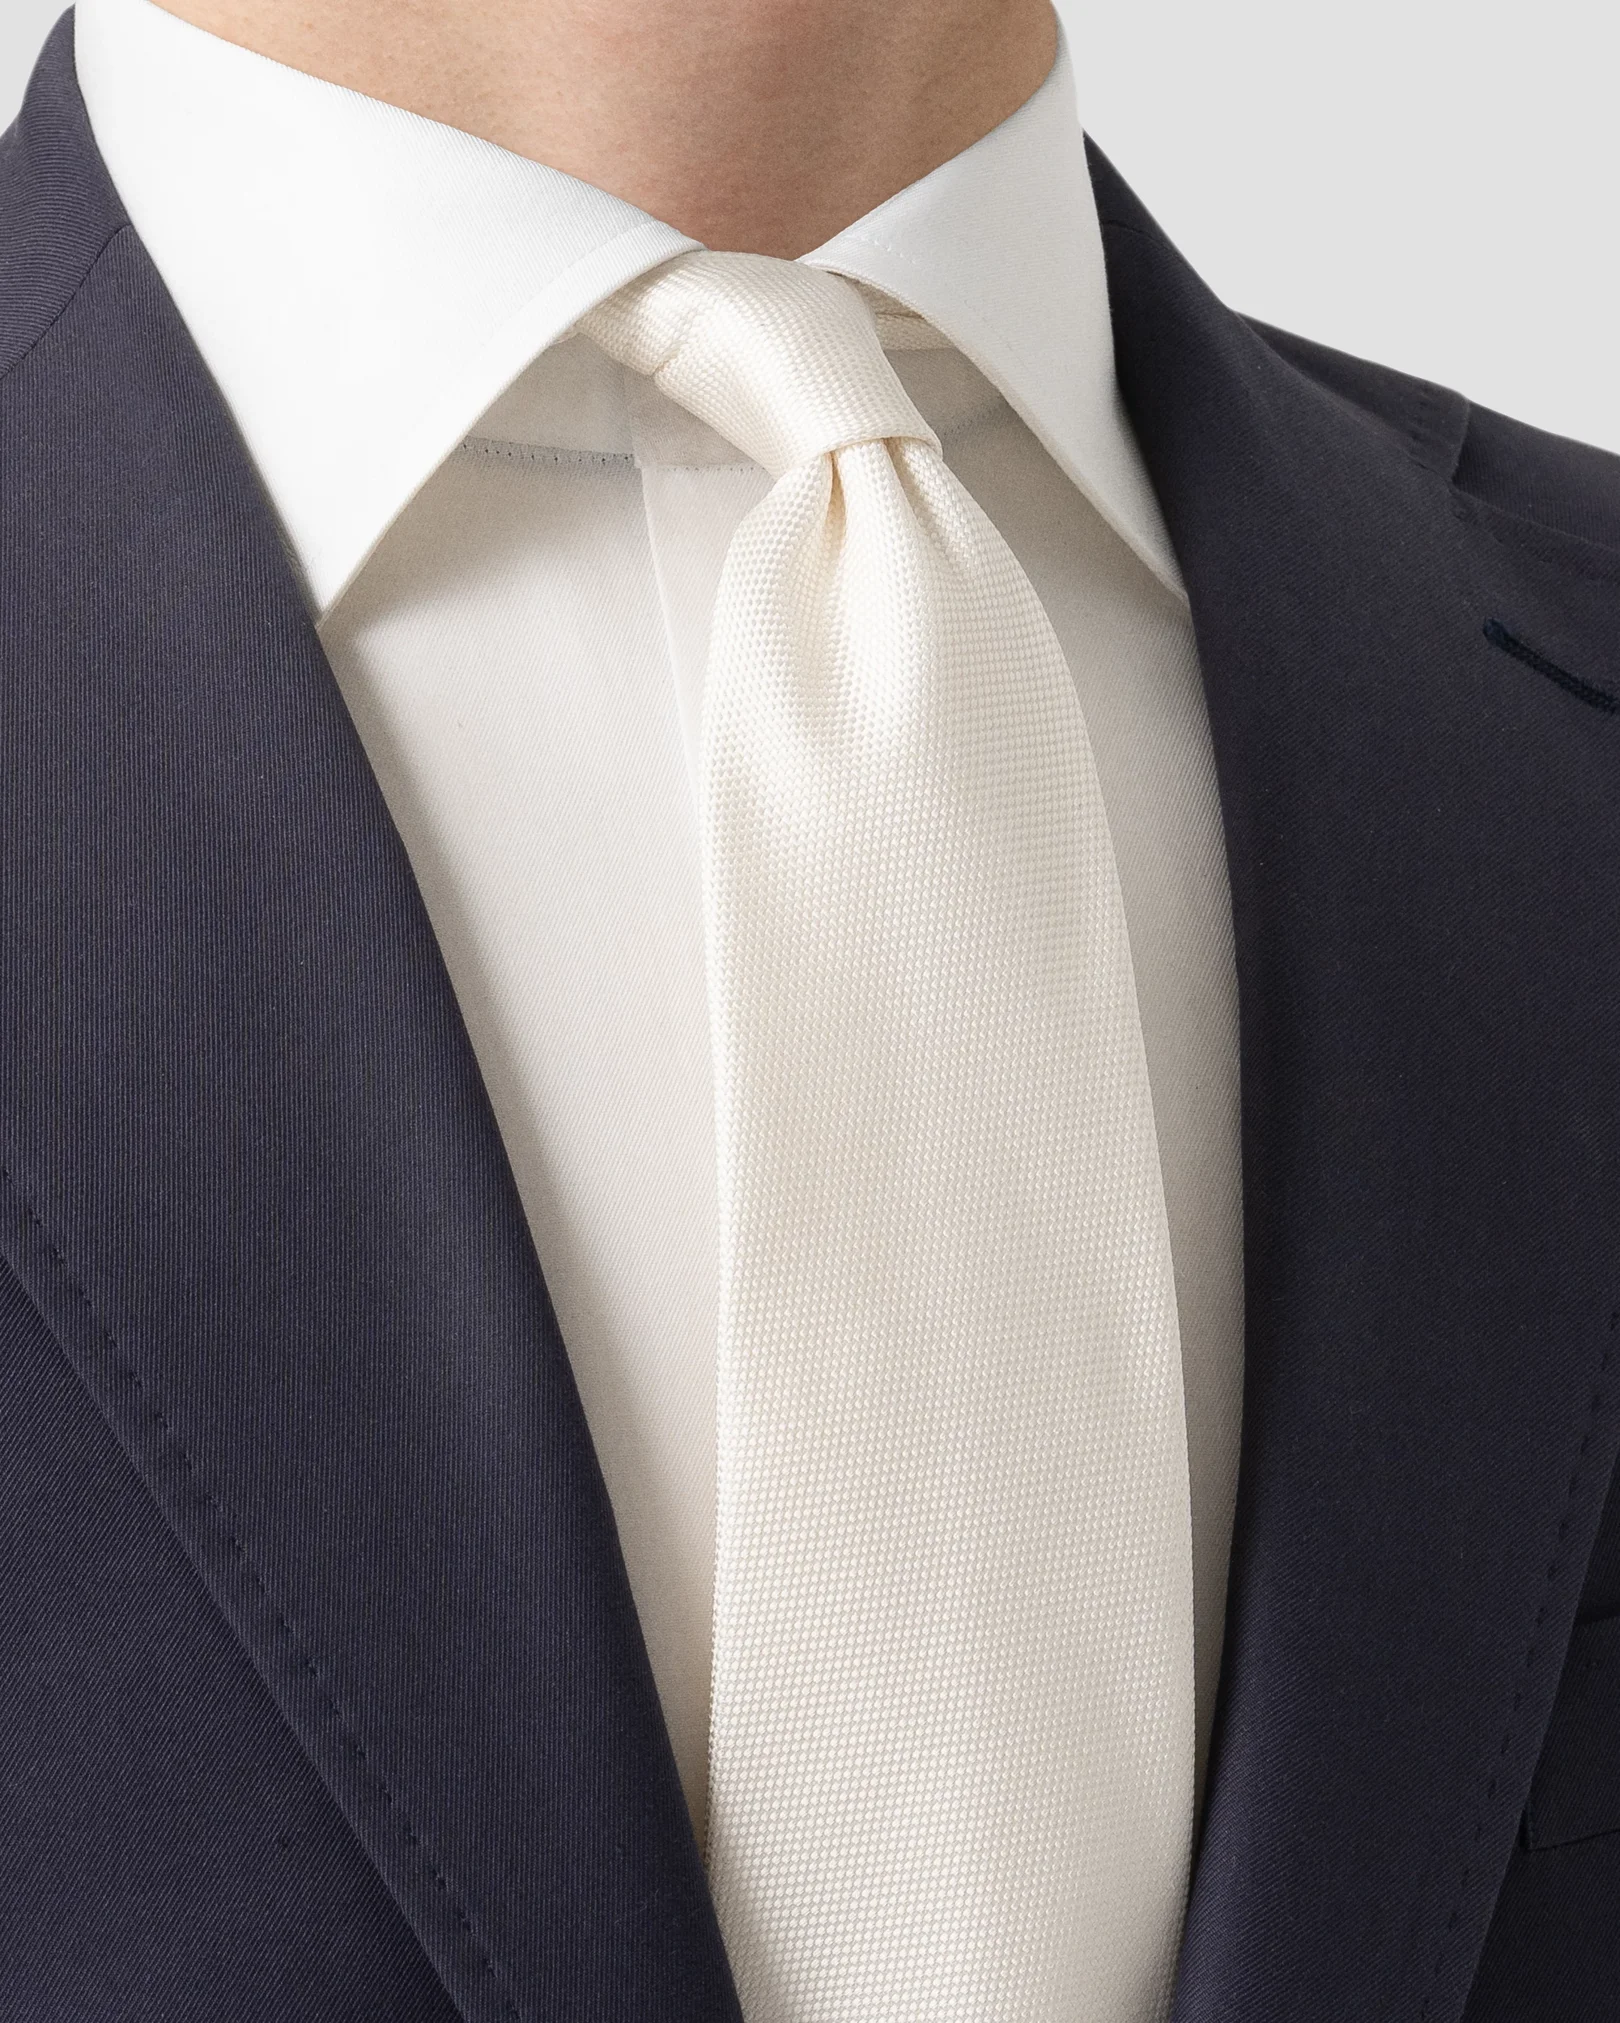 Eton - white basketweave tie